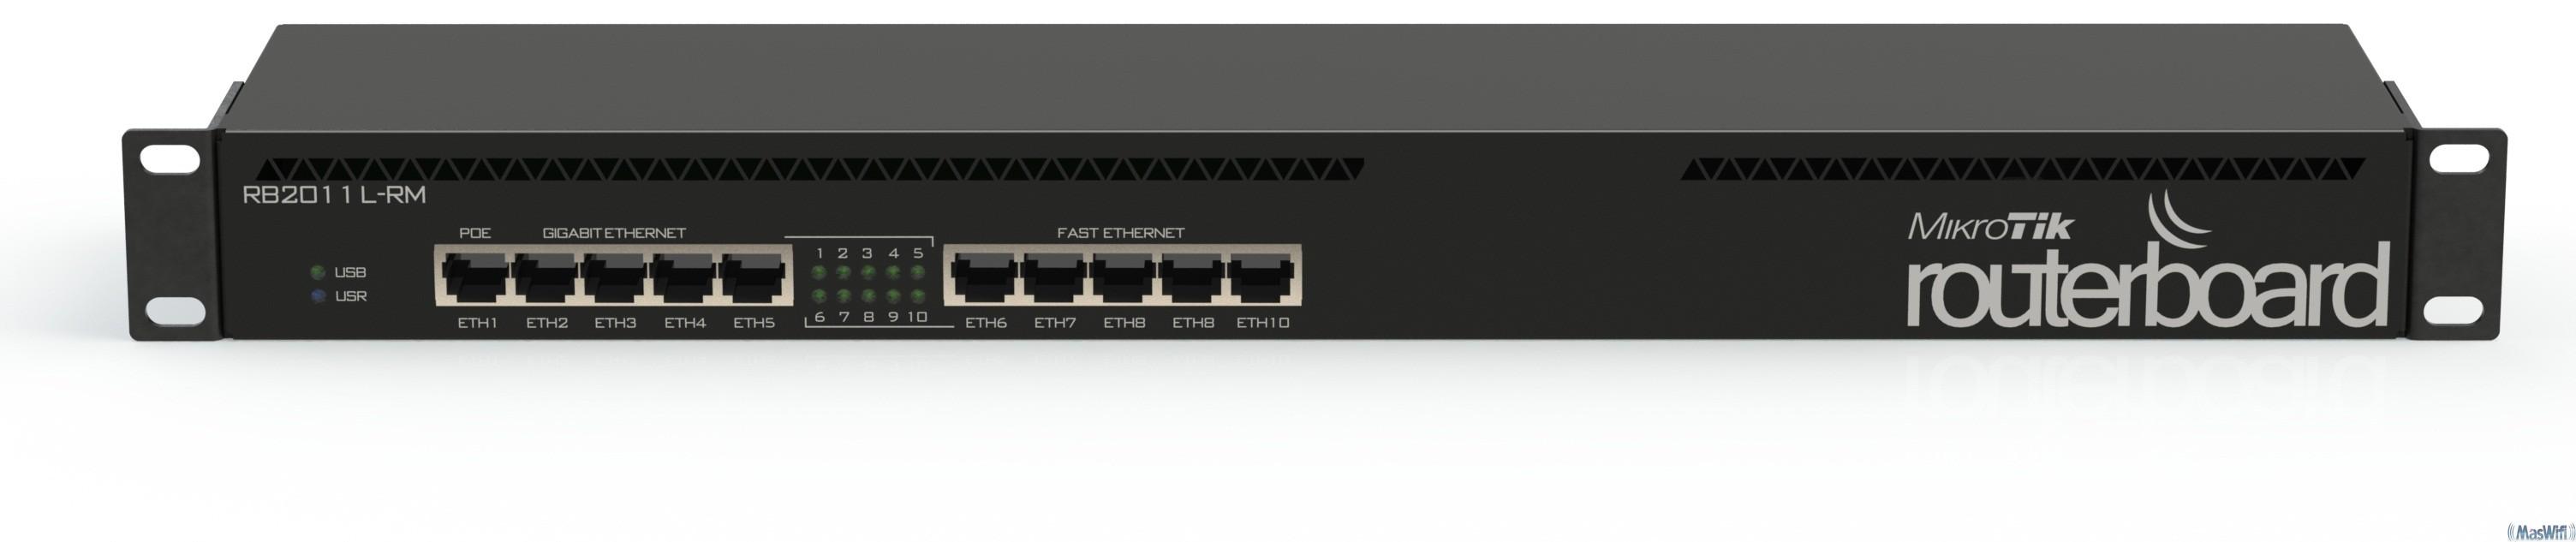 Foto Mikrotik RB2011L-RM RouterBOARD 10 Puertos LAN (5 Gigabit), Atheros 600MHz, 64MB RAM, PoE, Nivel 4, Rack 1U